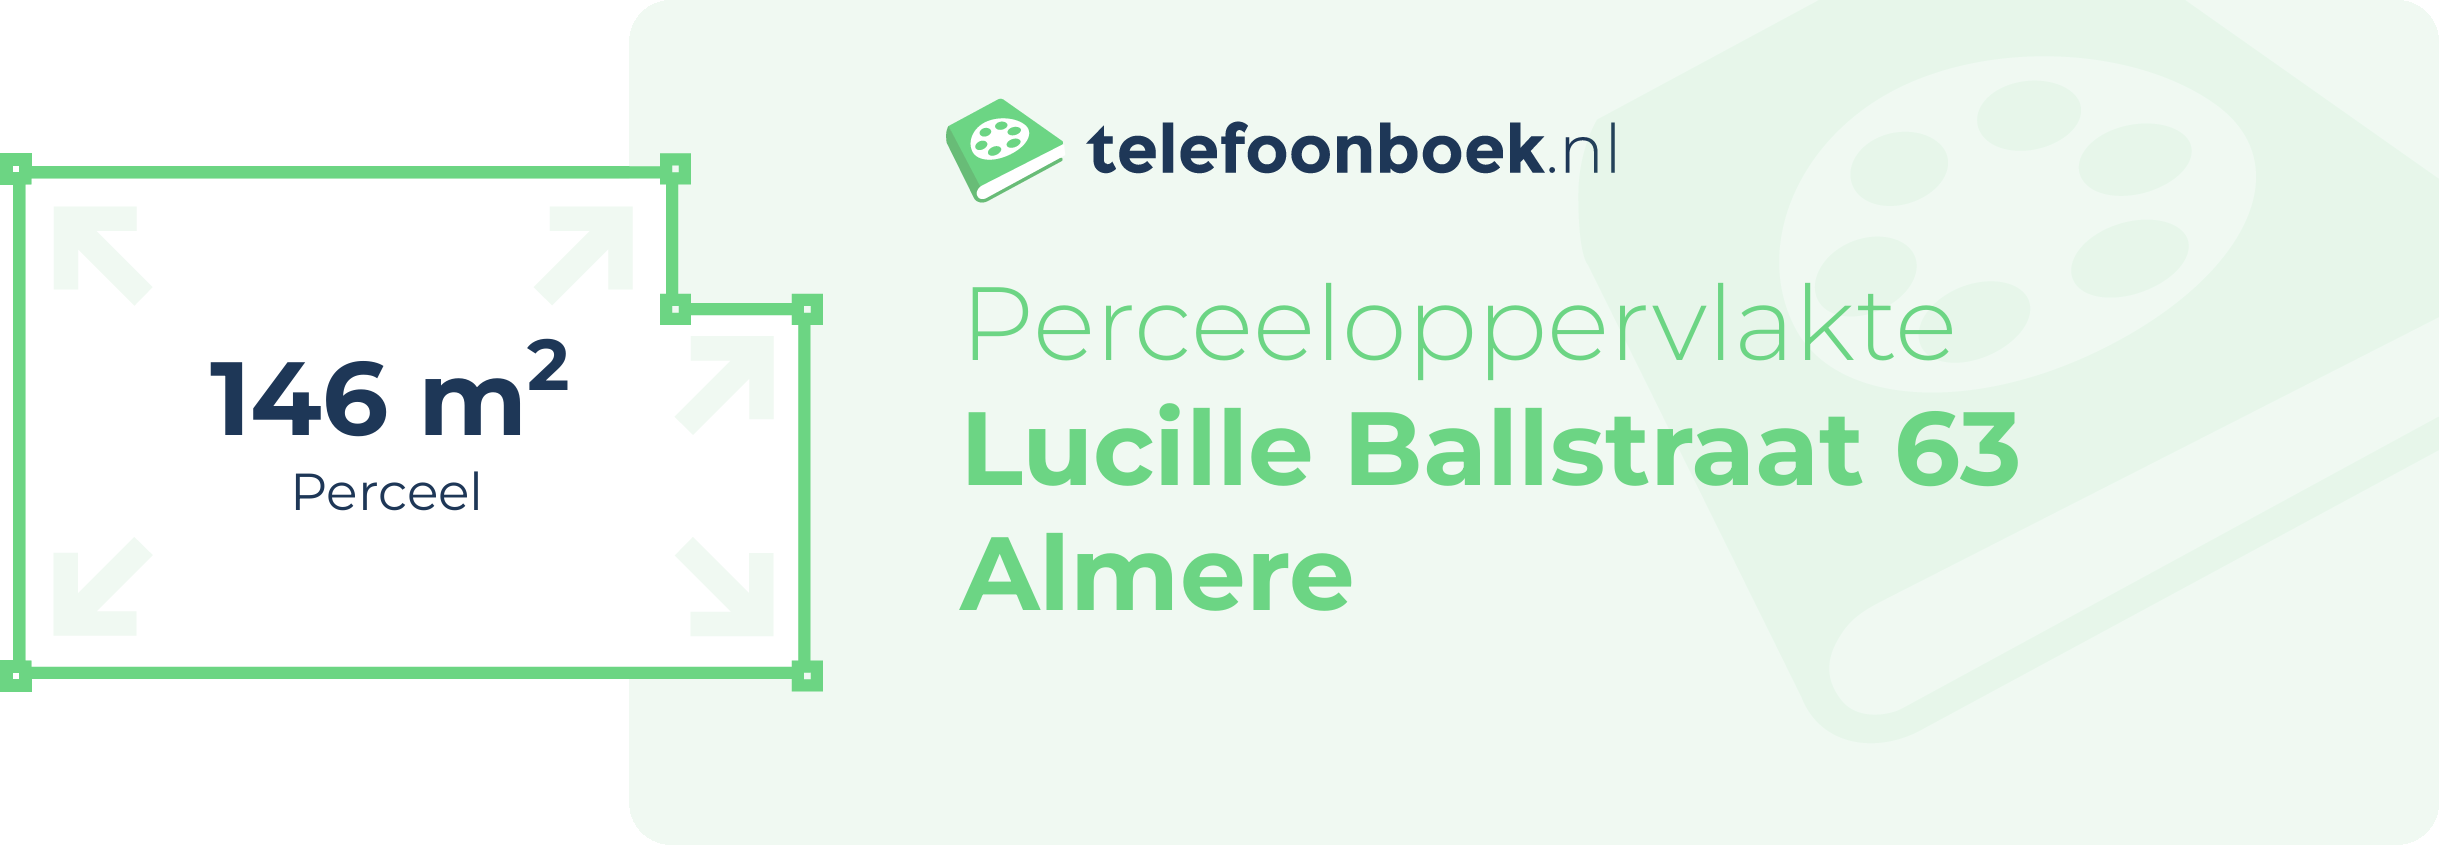 Perceeloppervlakte Lucille Ballstraat 63 Almere